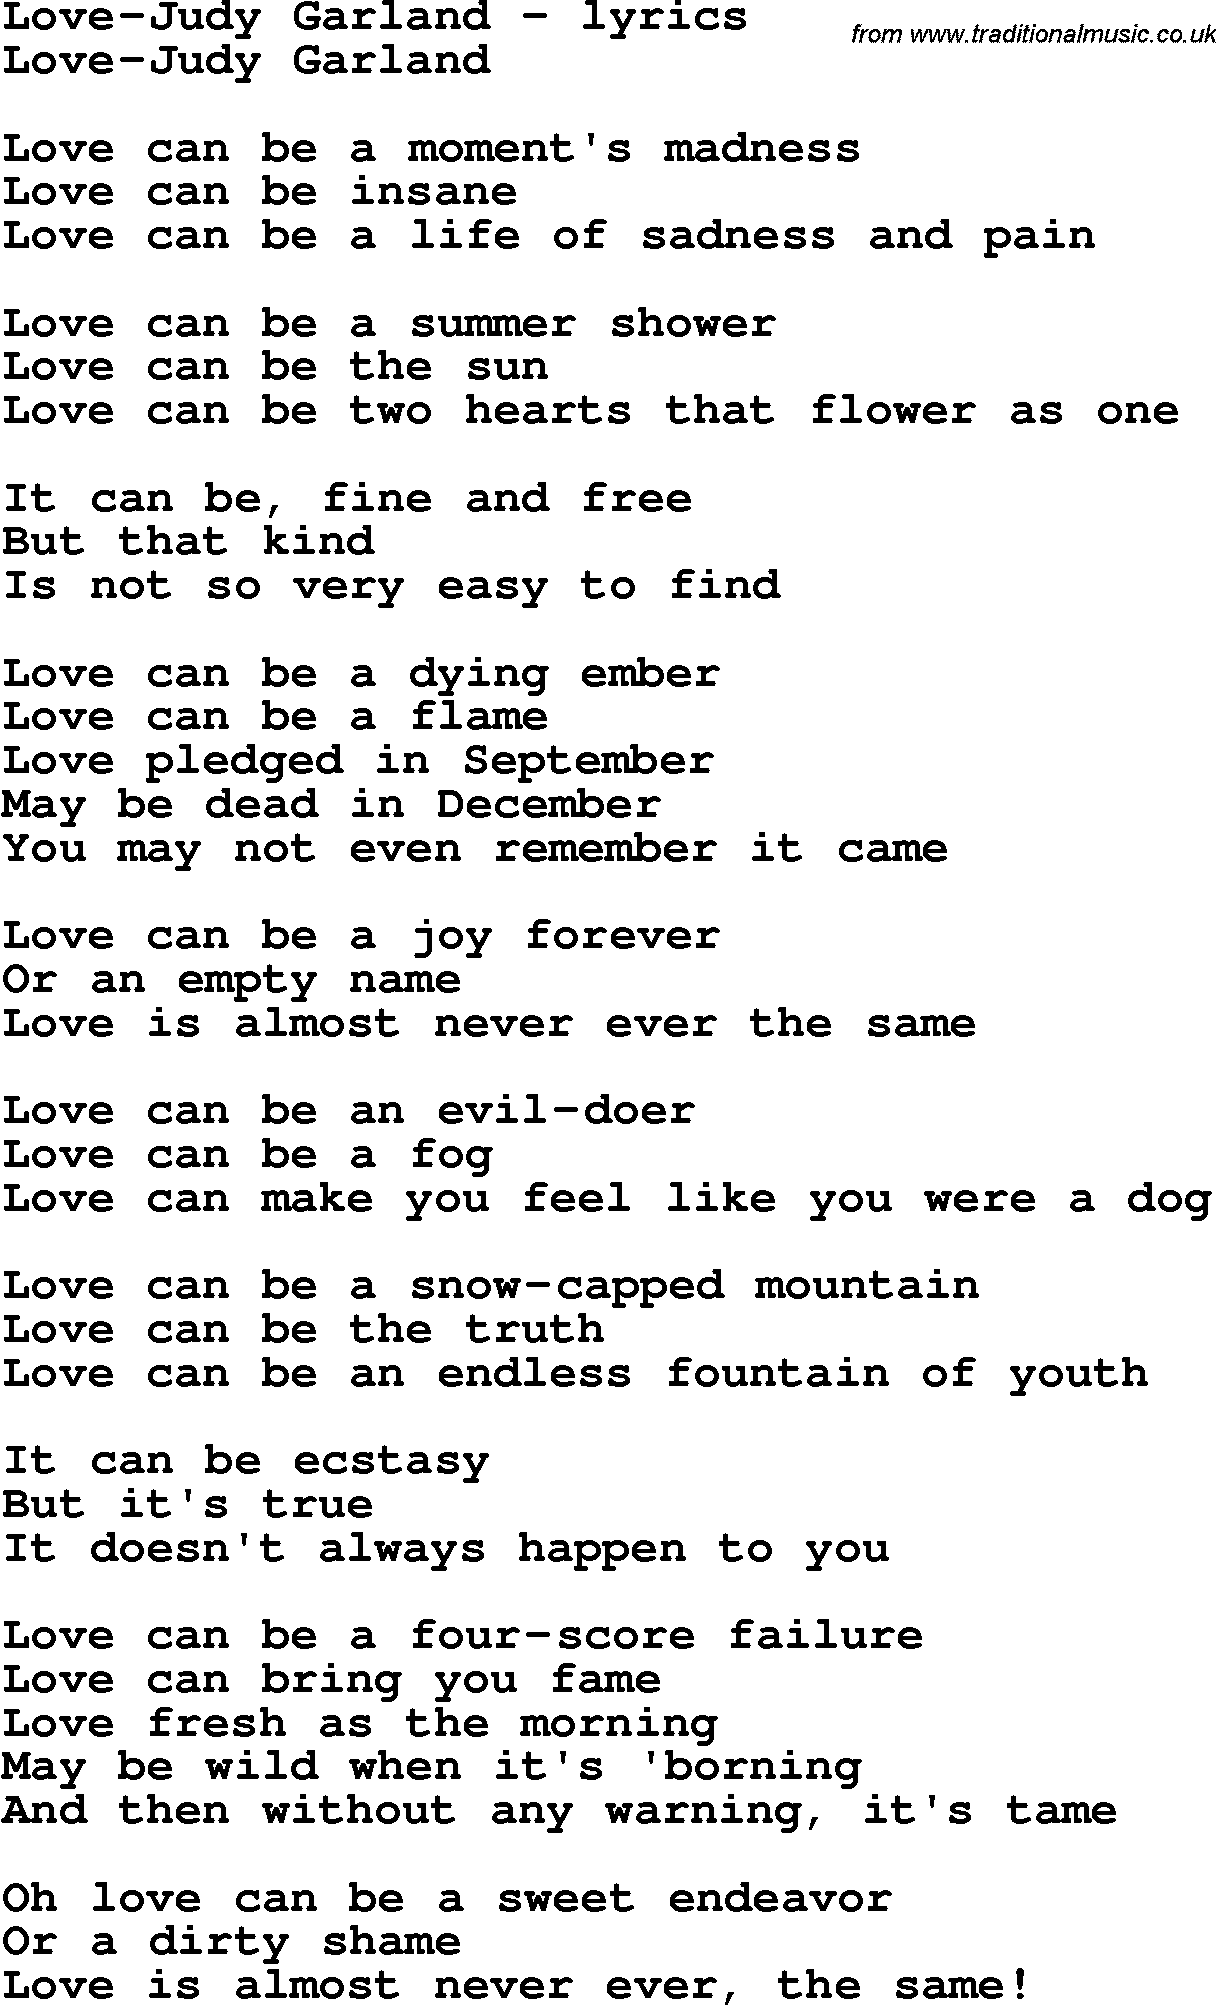 Love Song Lyrics for: Love-Judy Garland